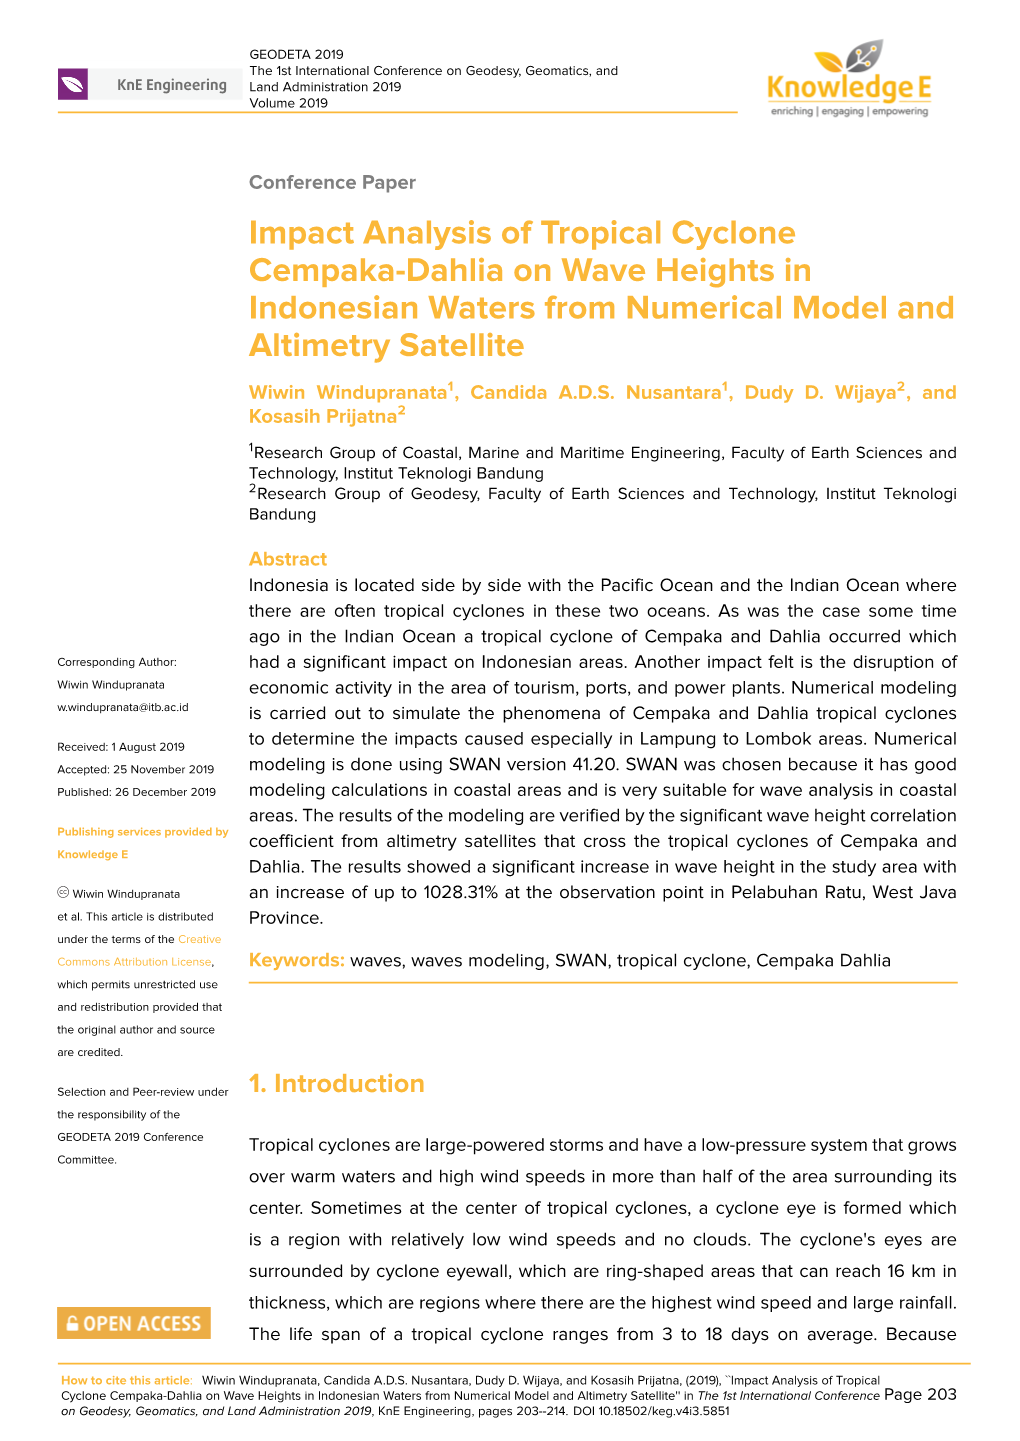 Impact Analysis of Tropical Cyclone Cempaka-Dahlia on Wave Heights